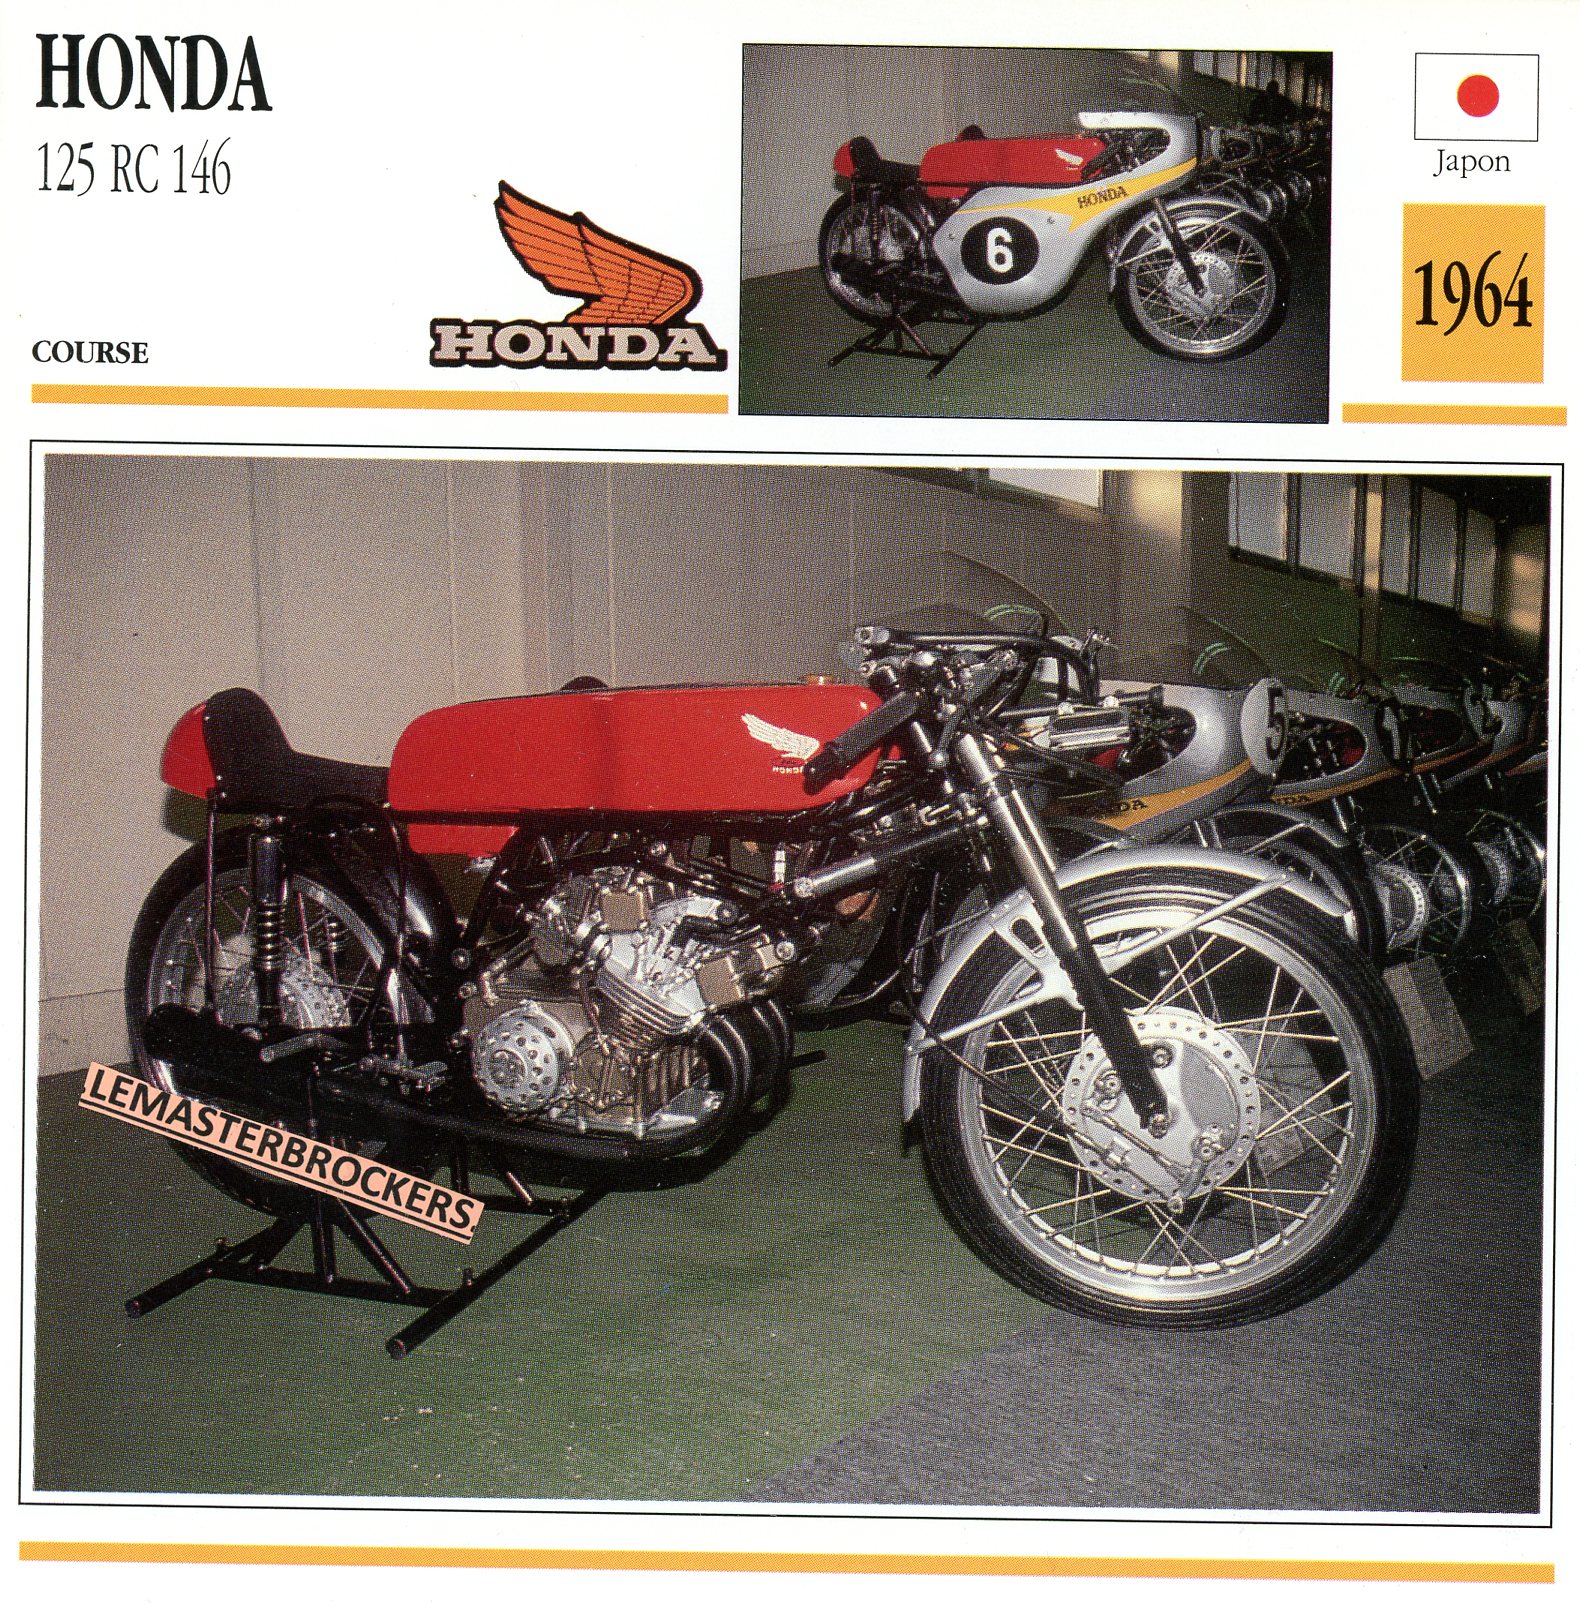 FICHE-MOTO-HONDA-125-RC146-1964-LEMASTERBROCKERS-CARS-MOTORCYCLE